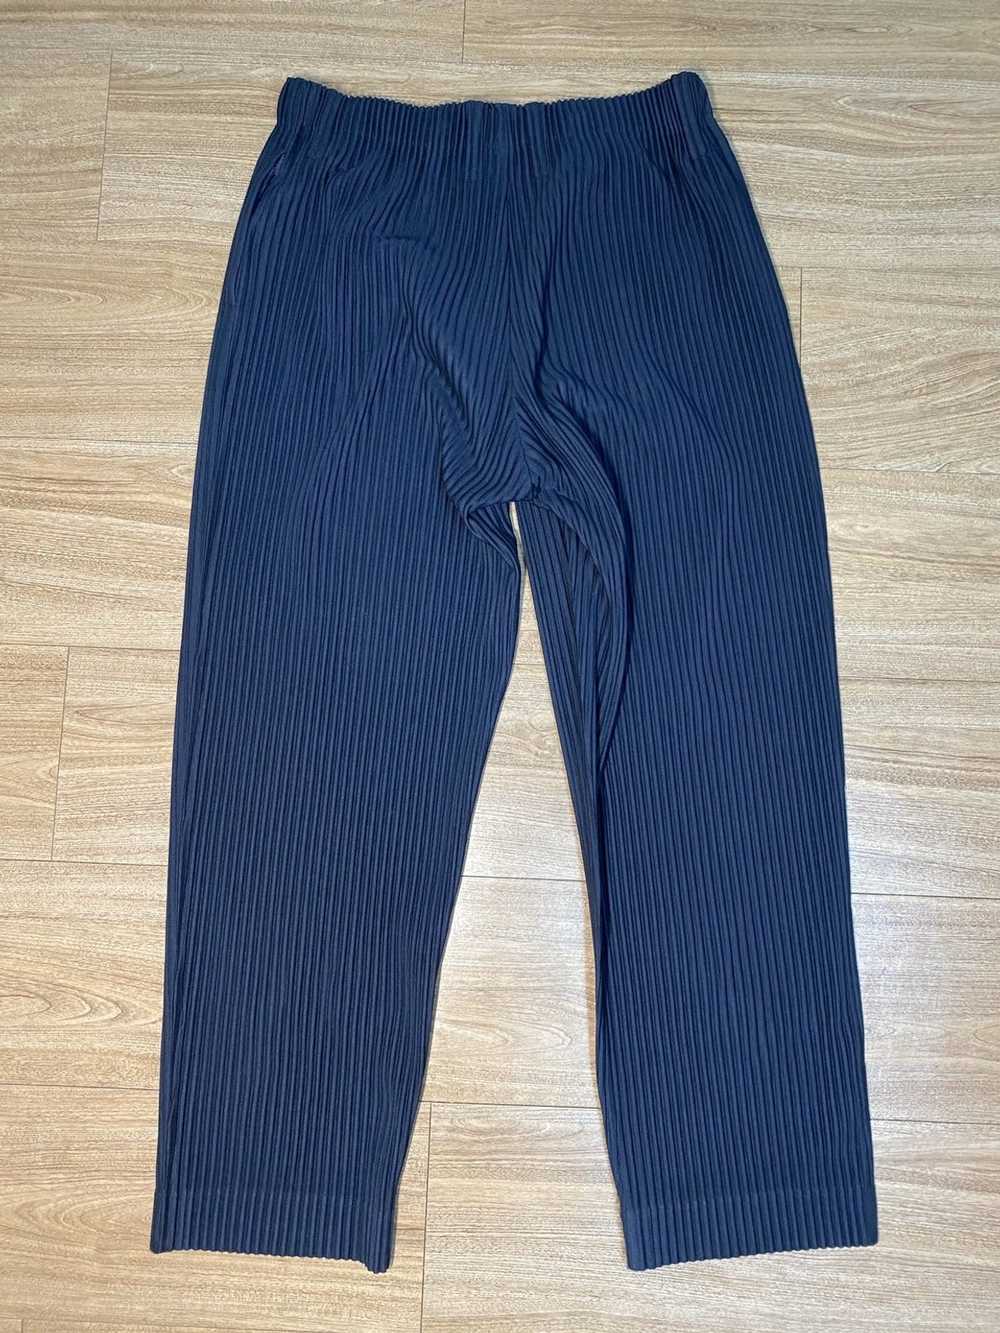 Issey Miyake Homme Plisse Slim Fit Trousers JF172 - image 3